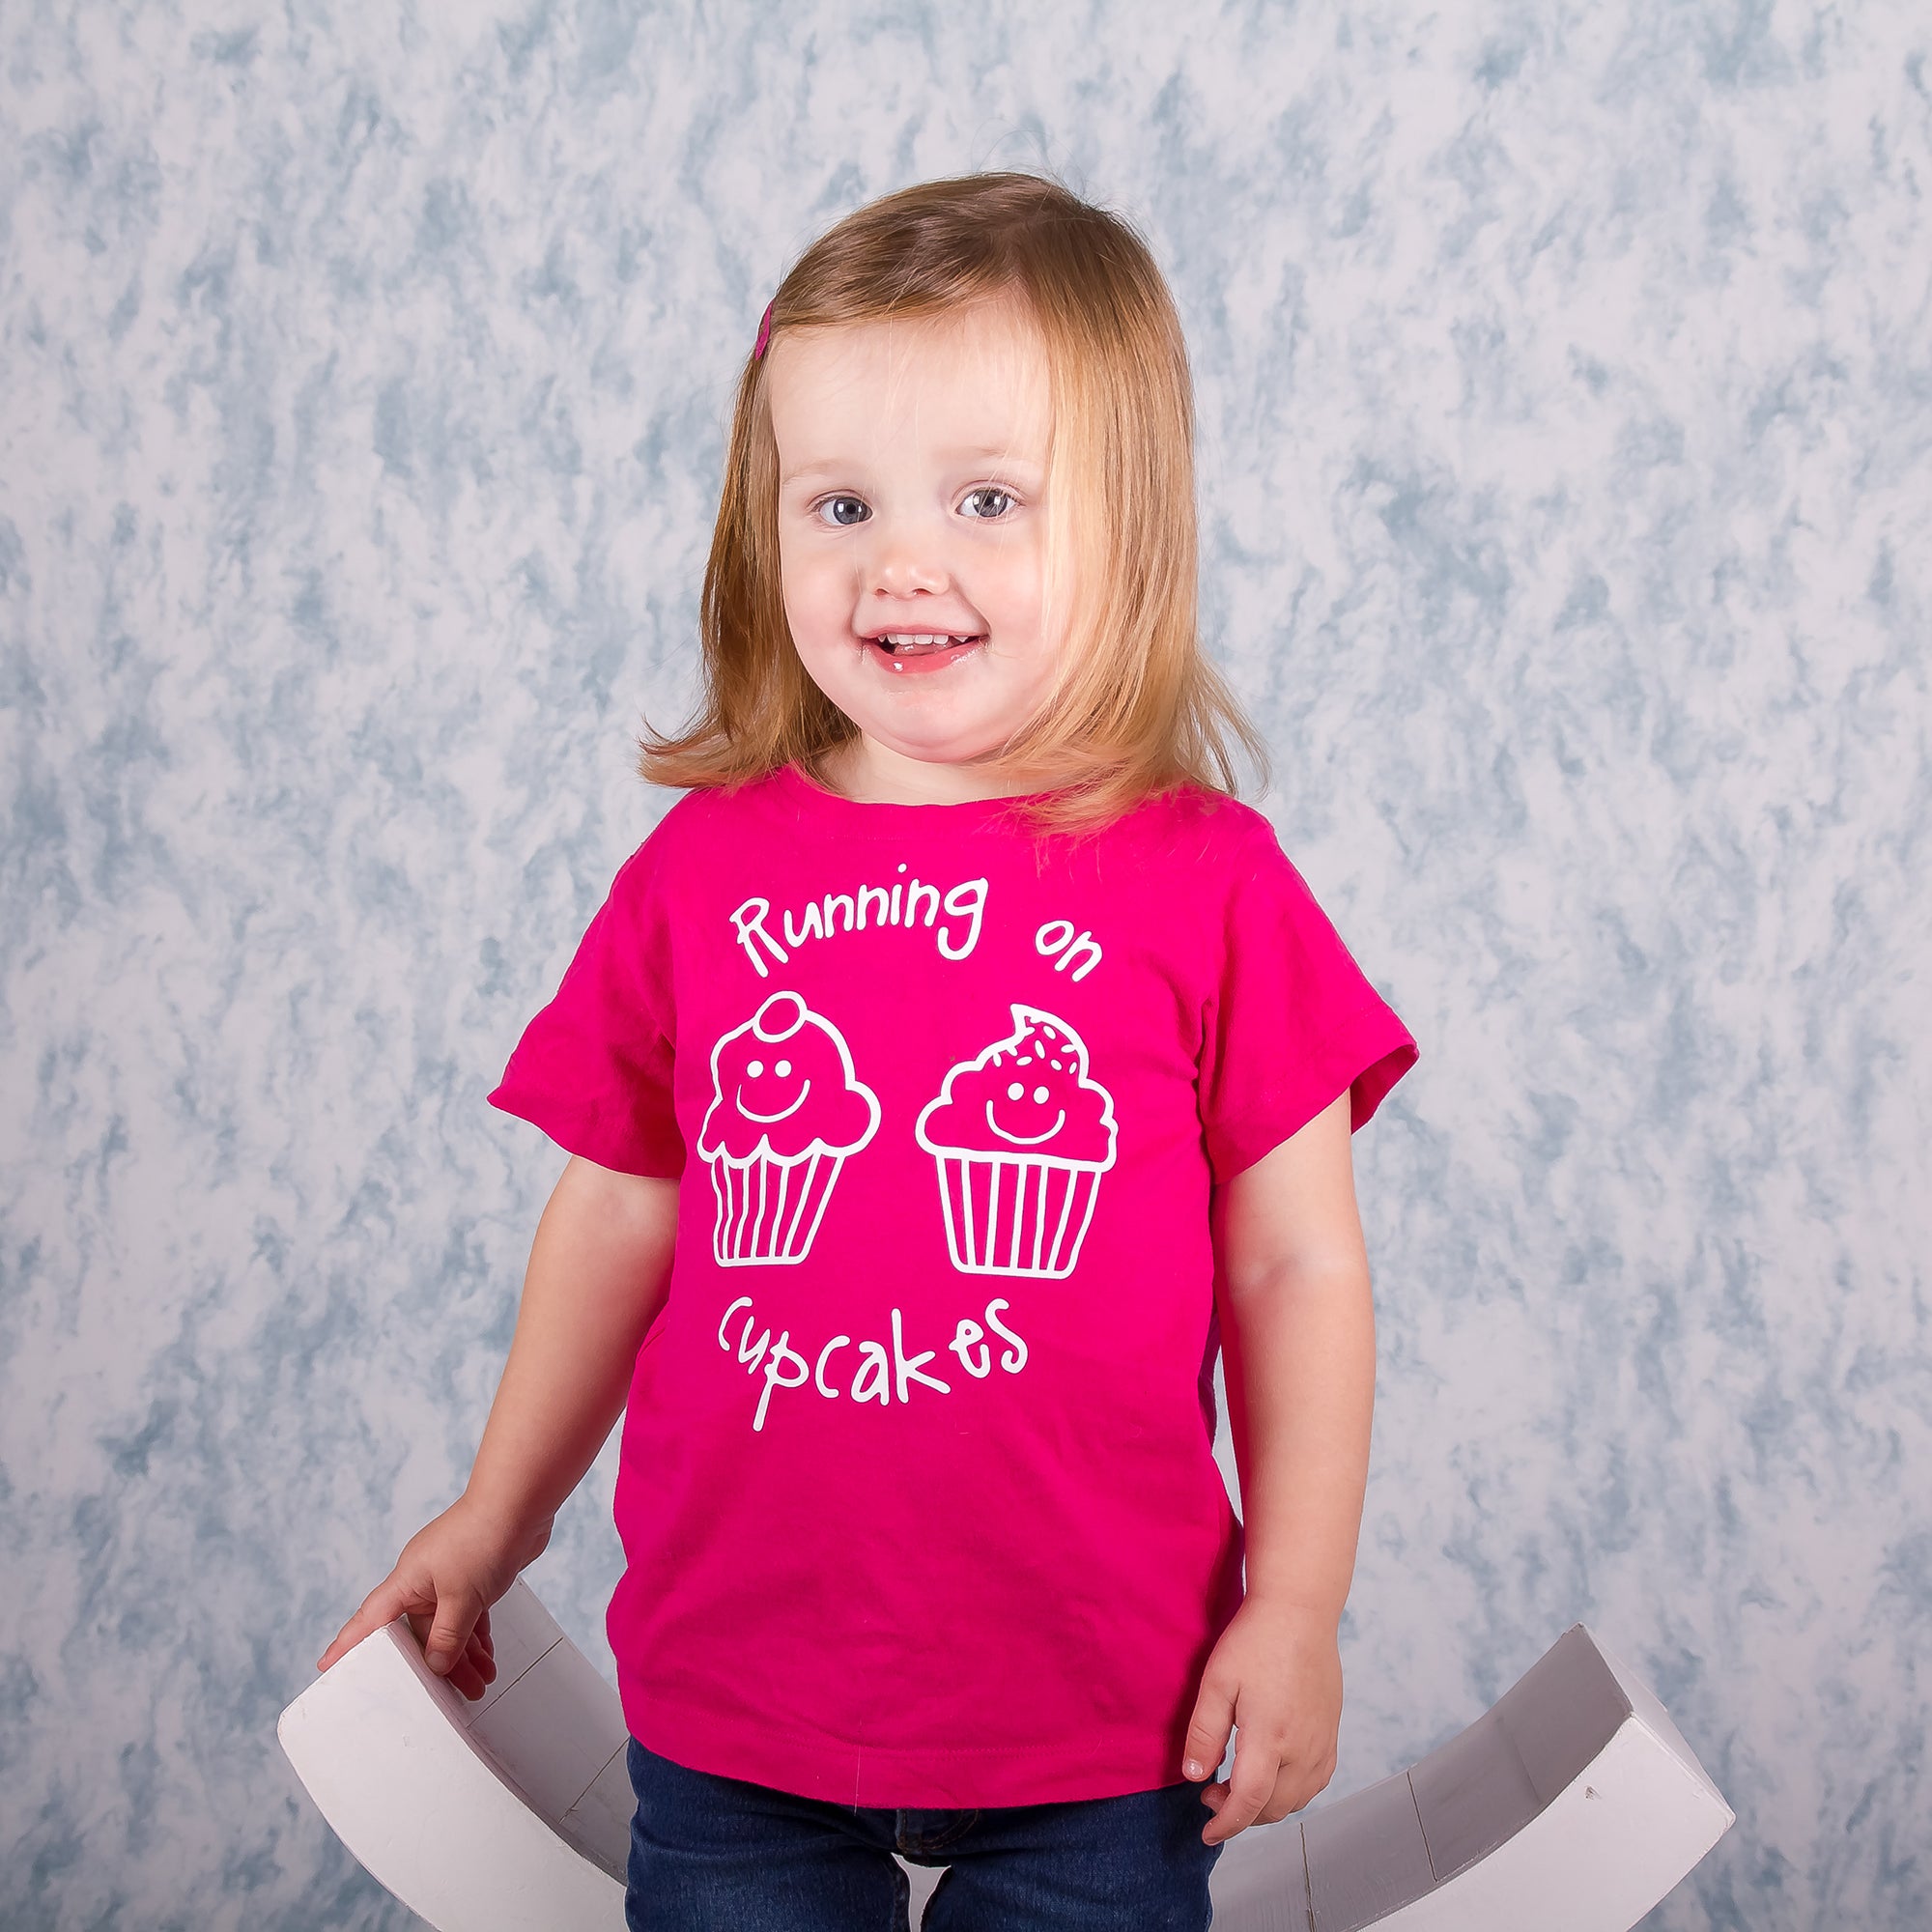 'Running on cupcakes' kids shortsleeve shirt